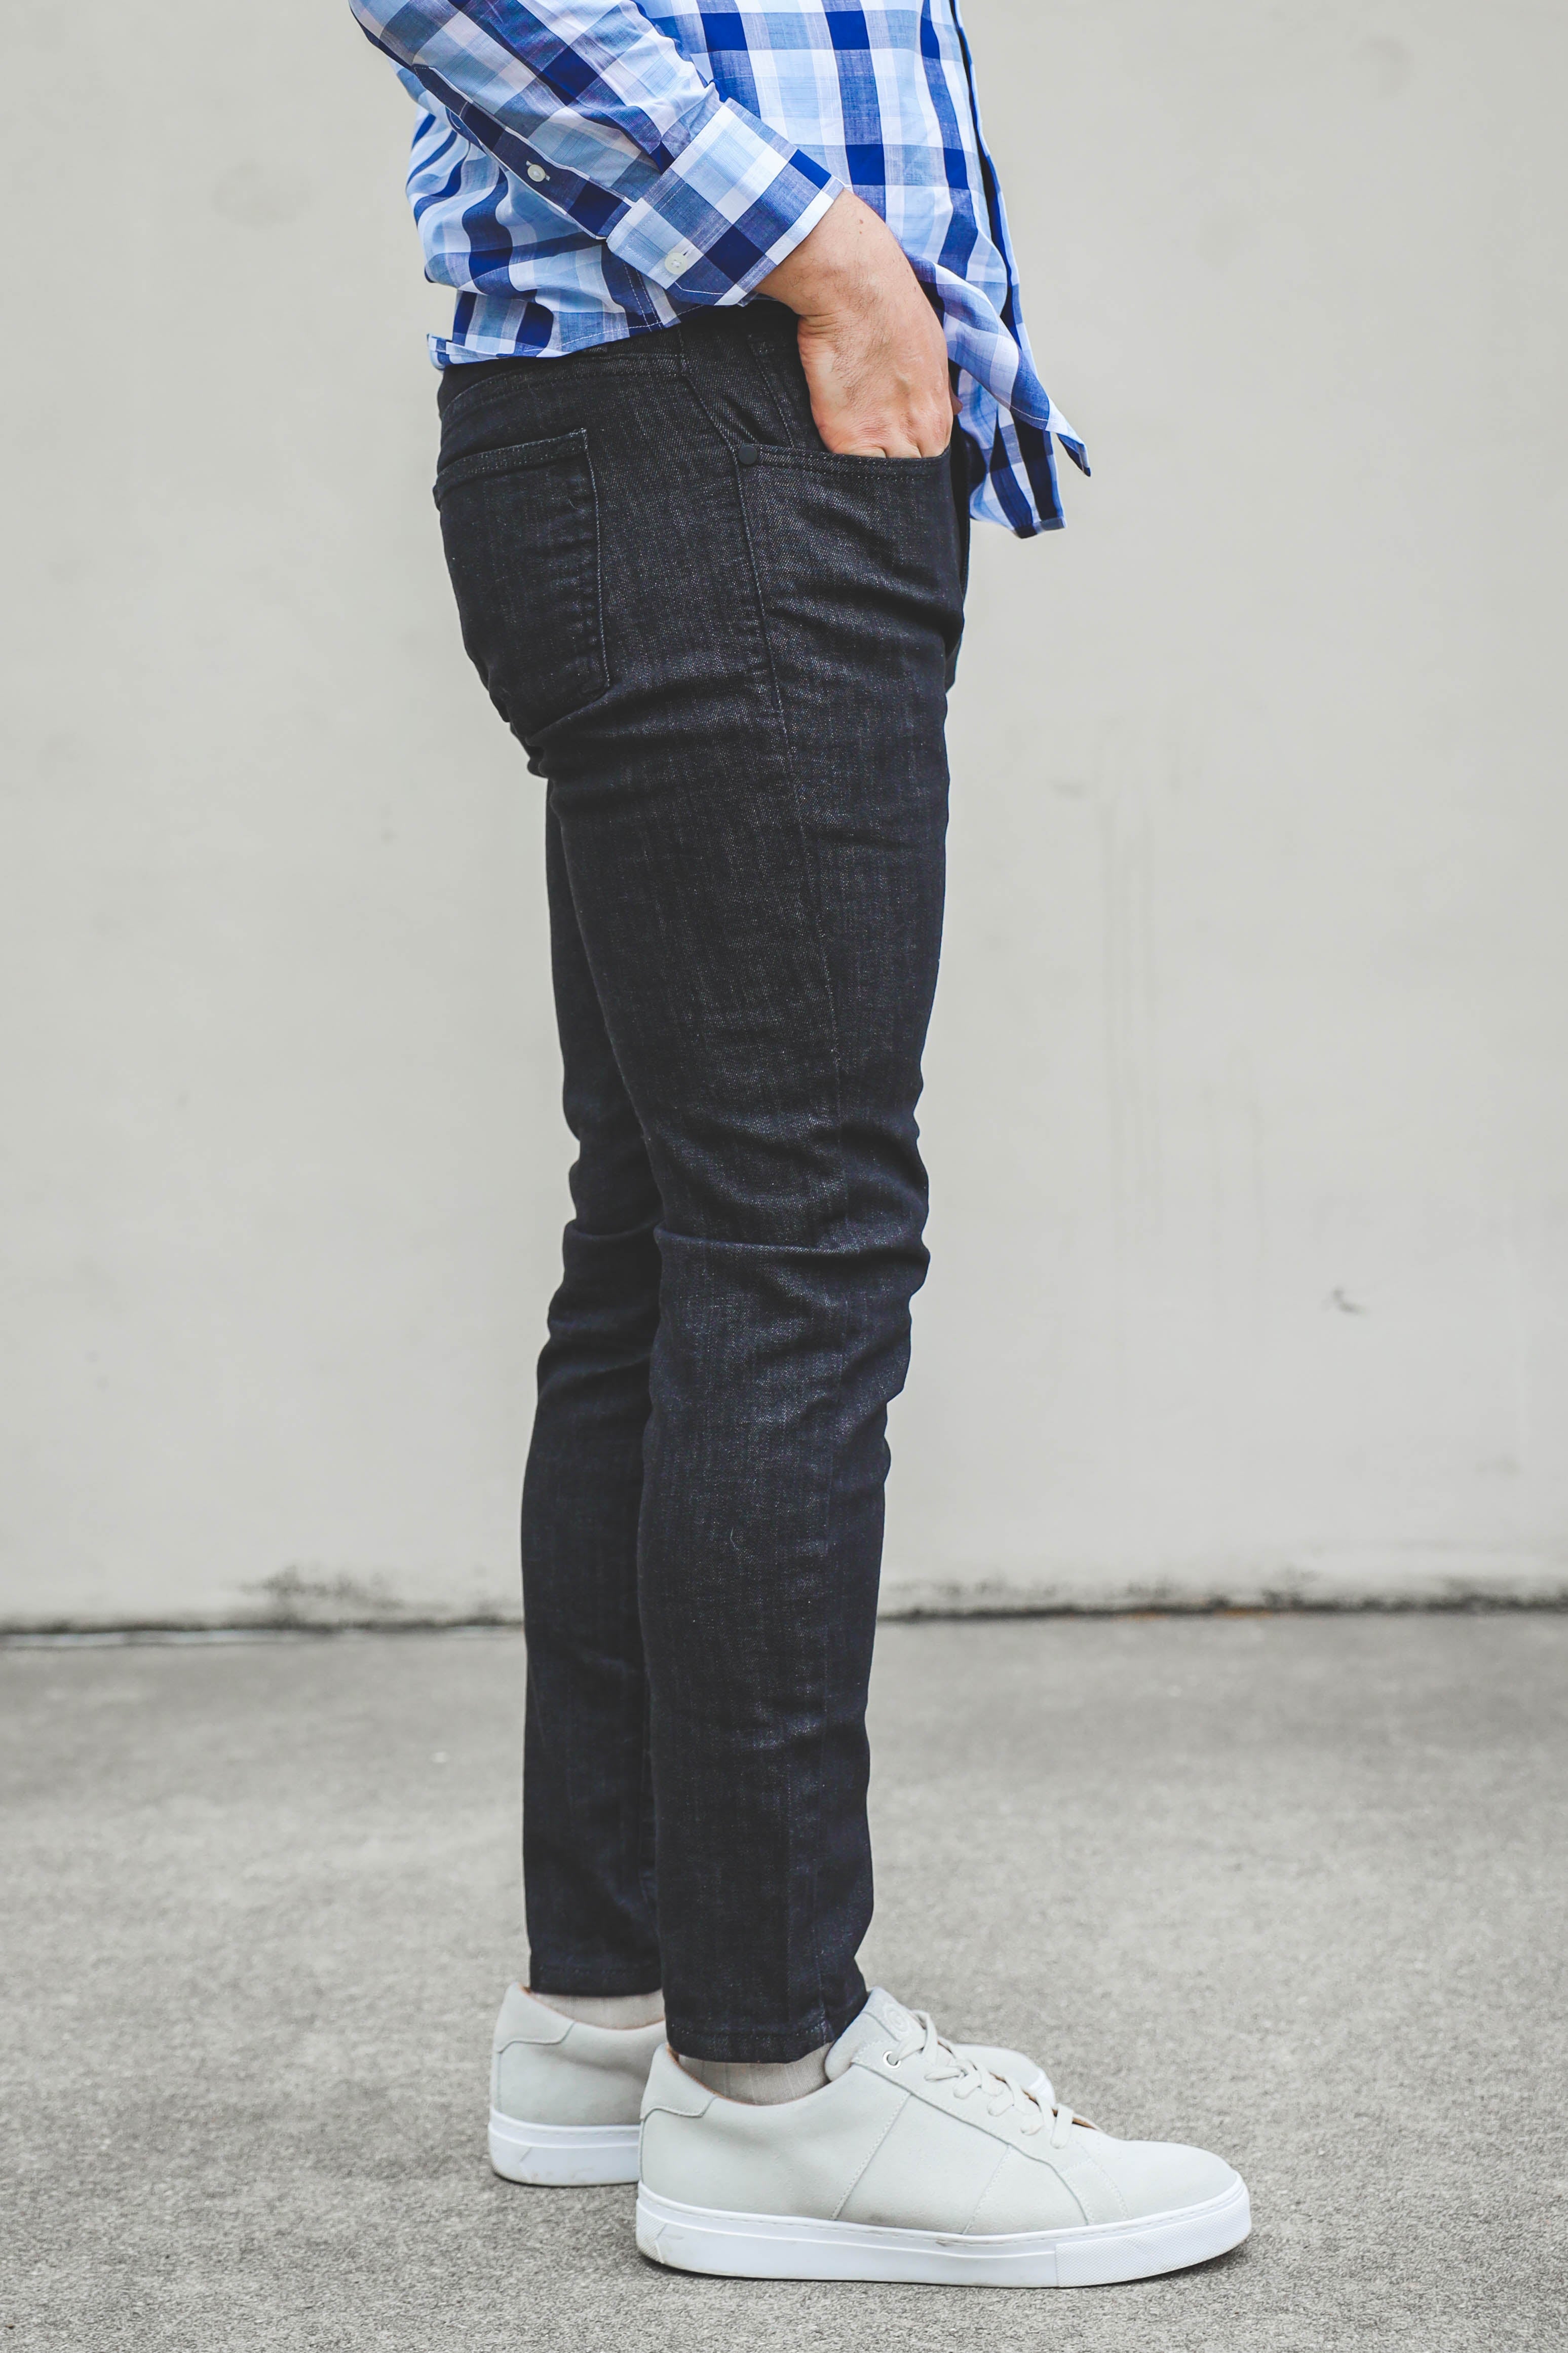 Short Inseam Jeans for Men FAQ